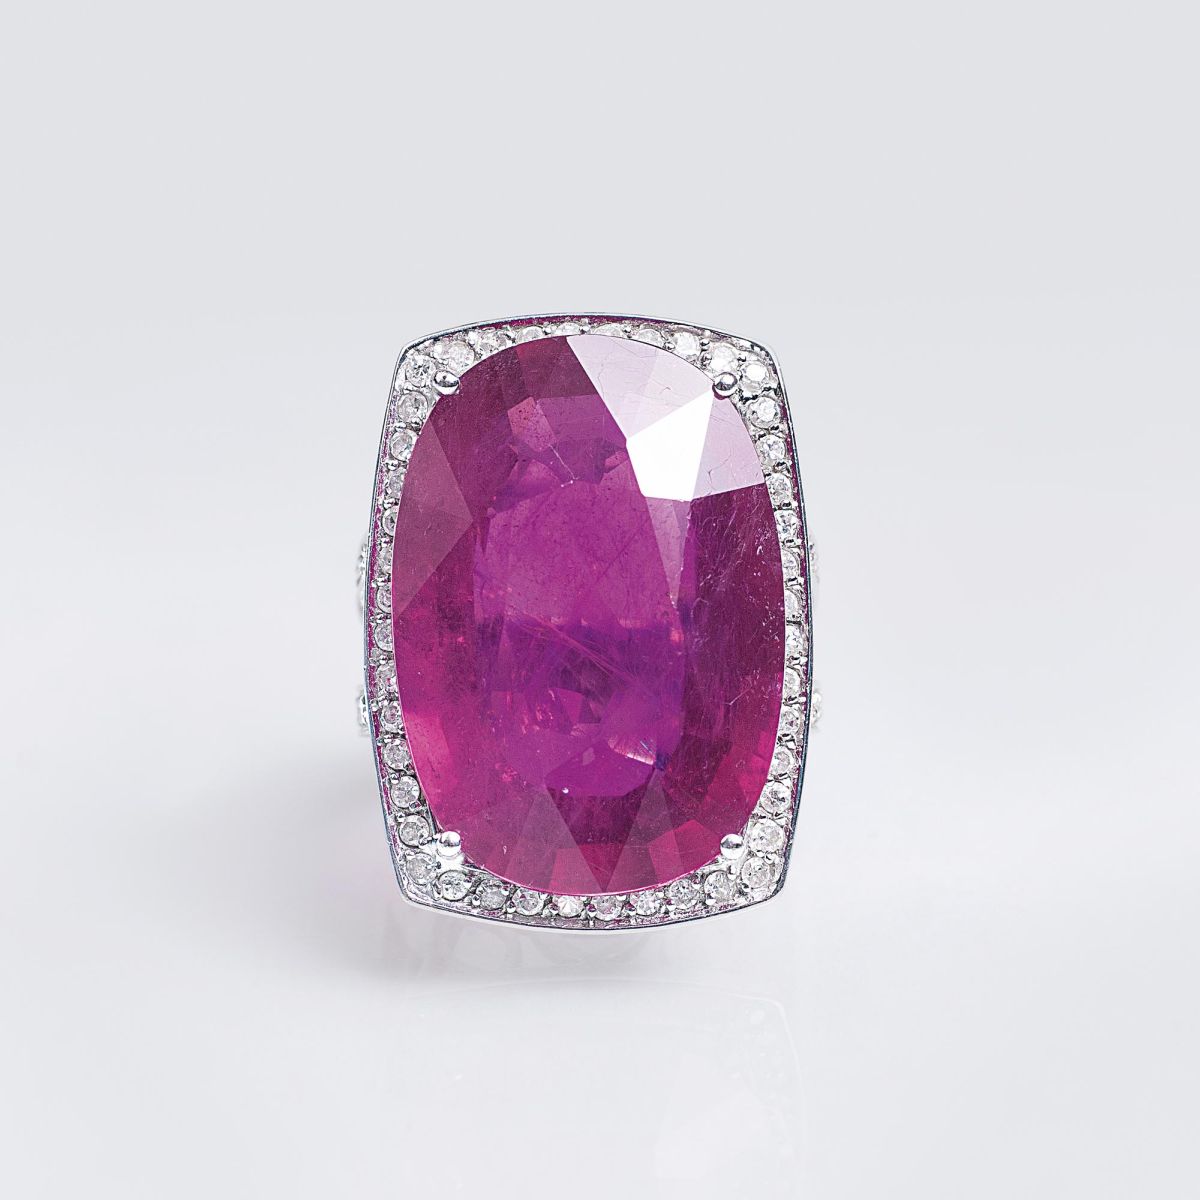 A Large Ruby Diamond Ring - image 2